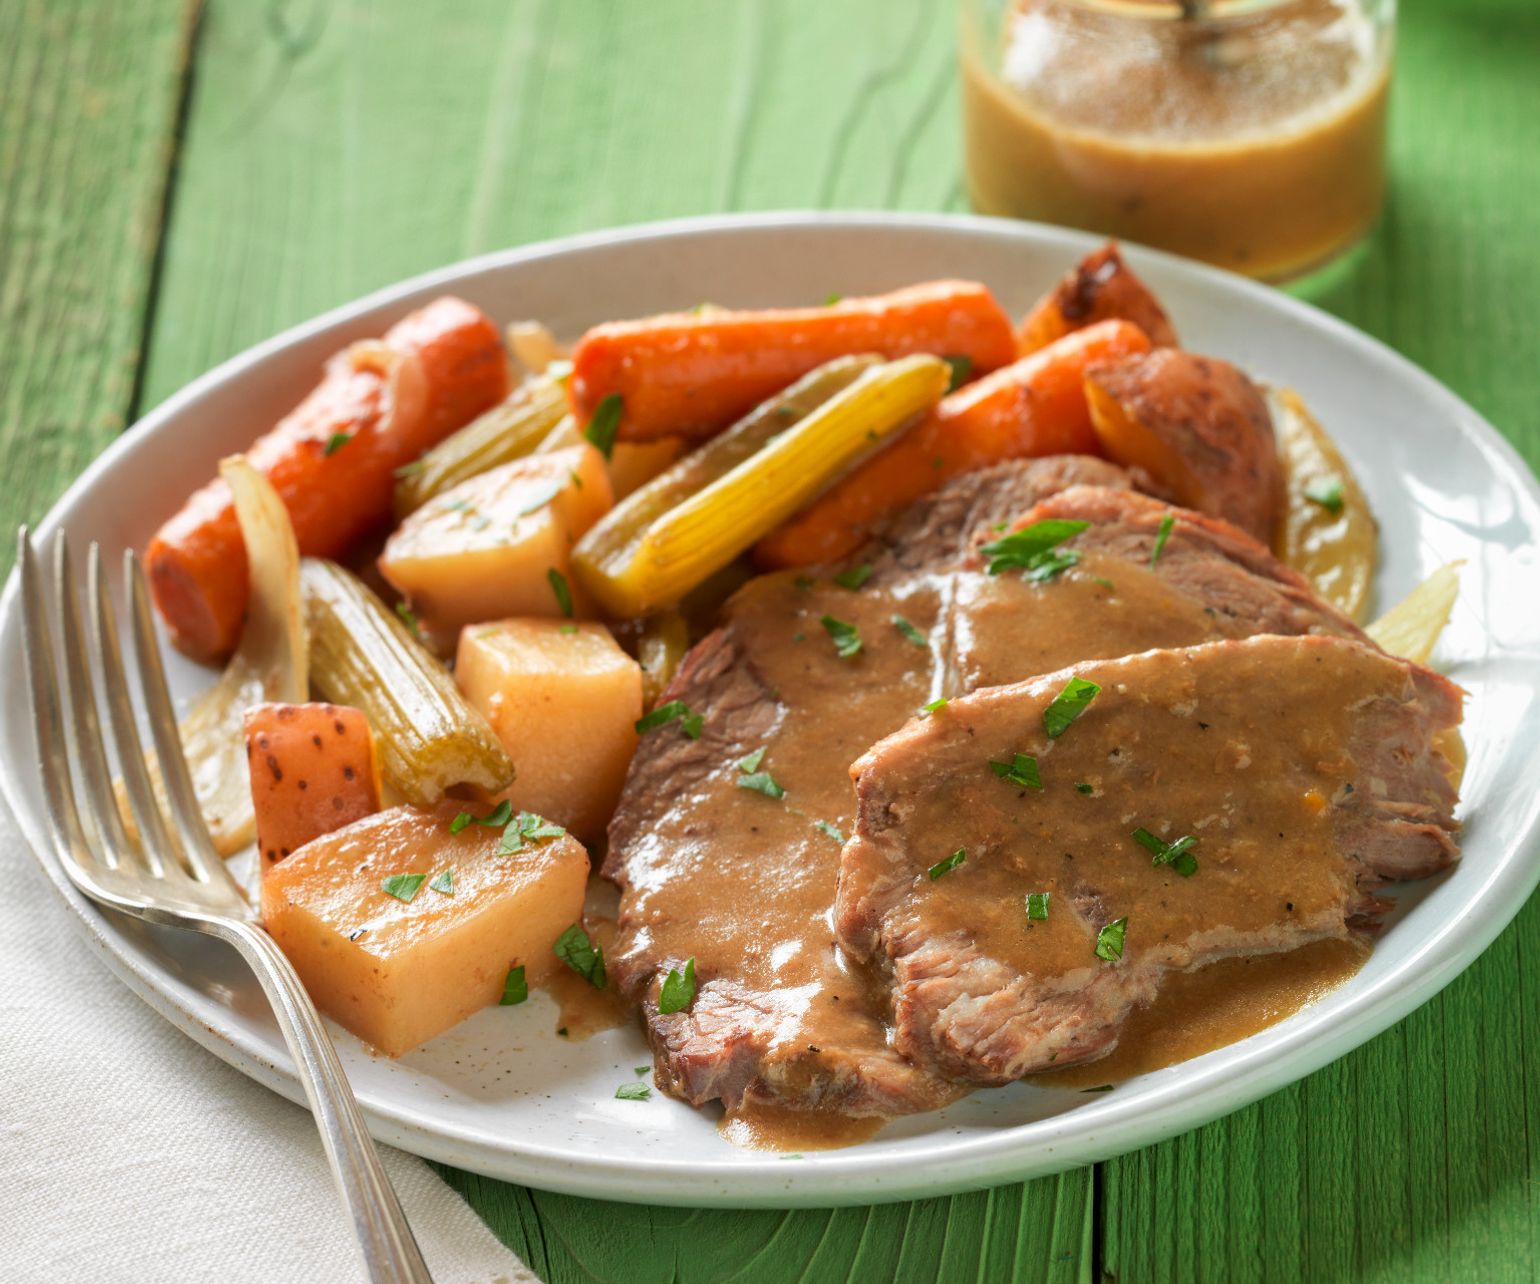 Irish-Inspired Beef Pot Roast and Vegetables